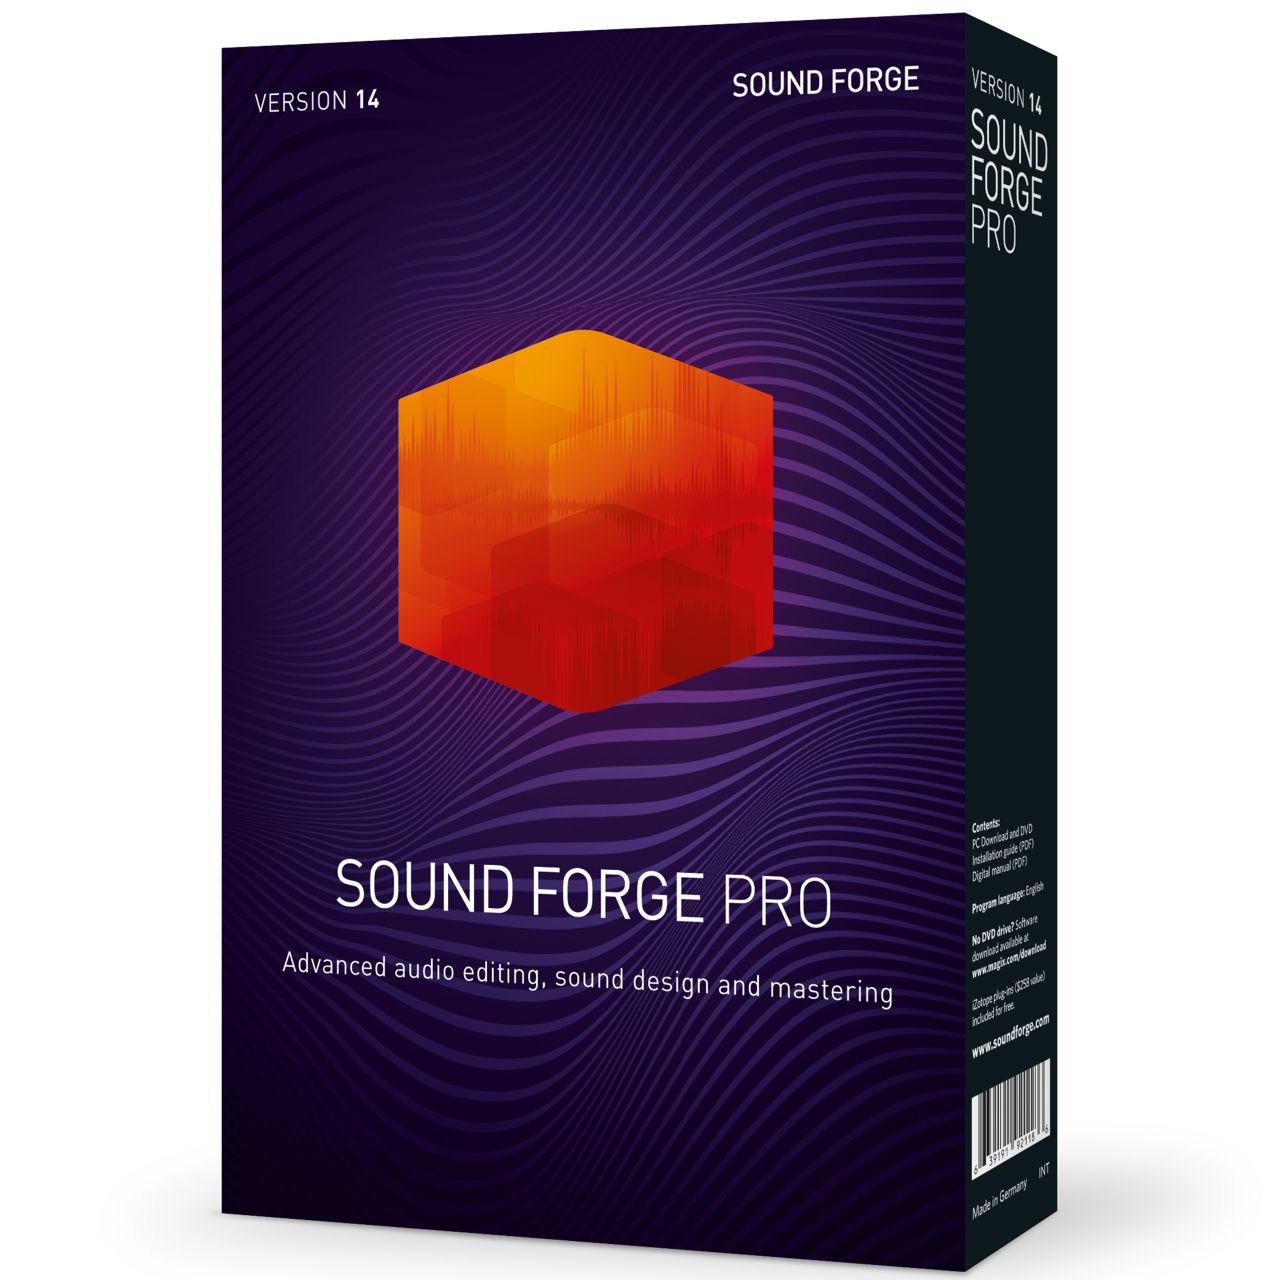 sound forge mac 3